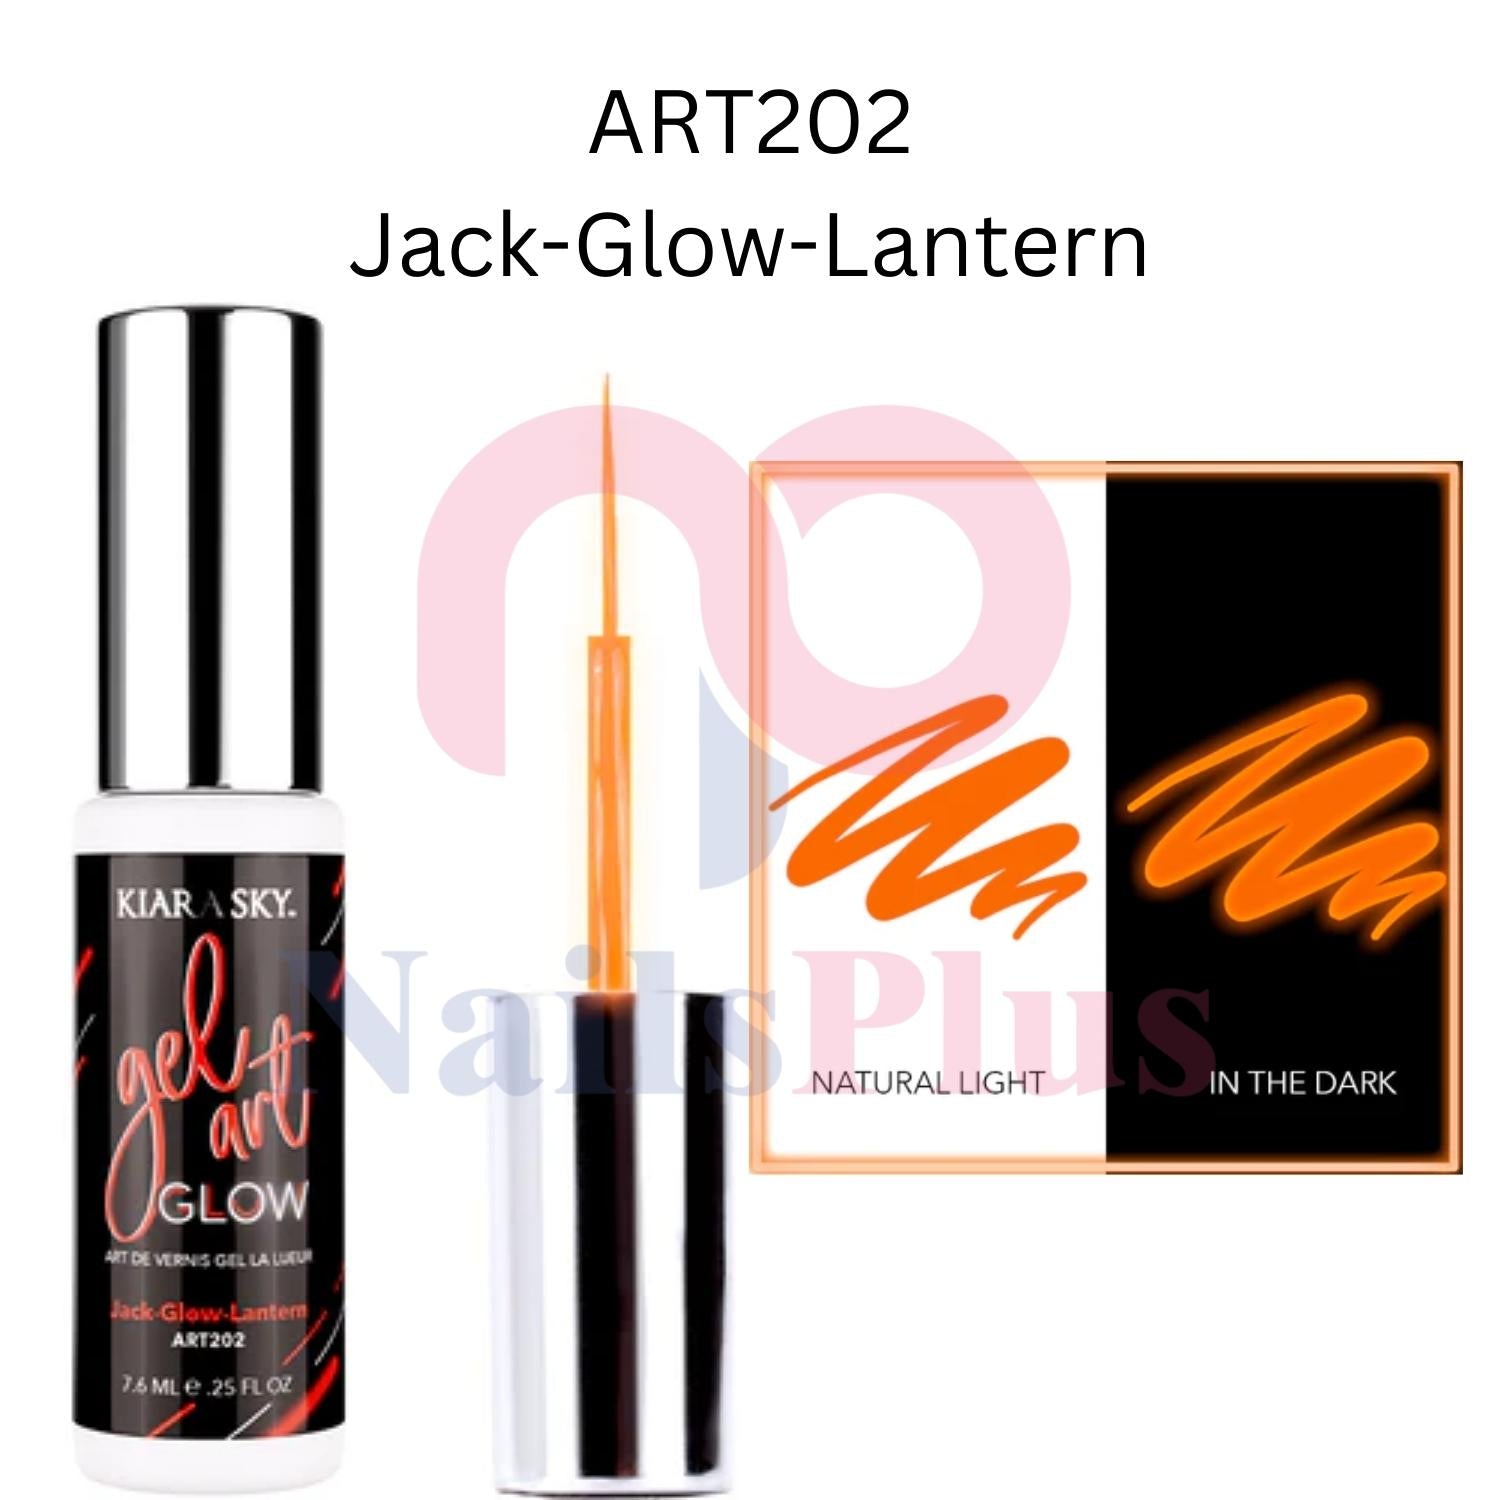 Jack Glow Lantern